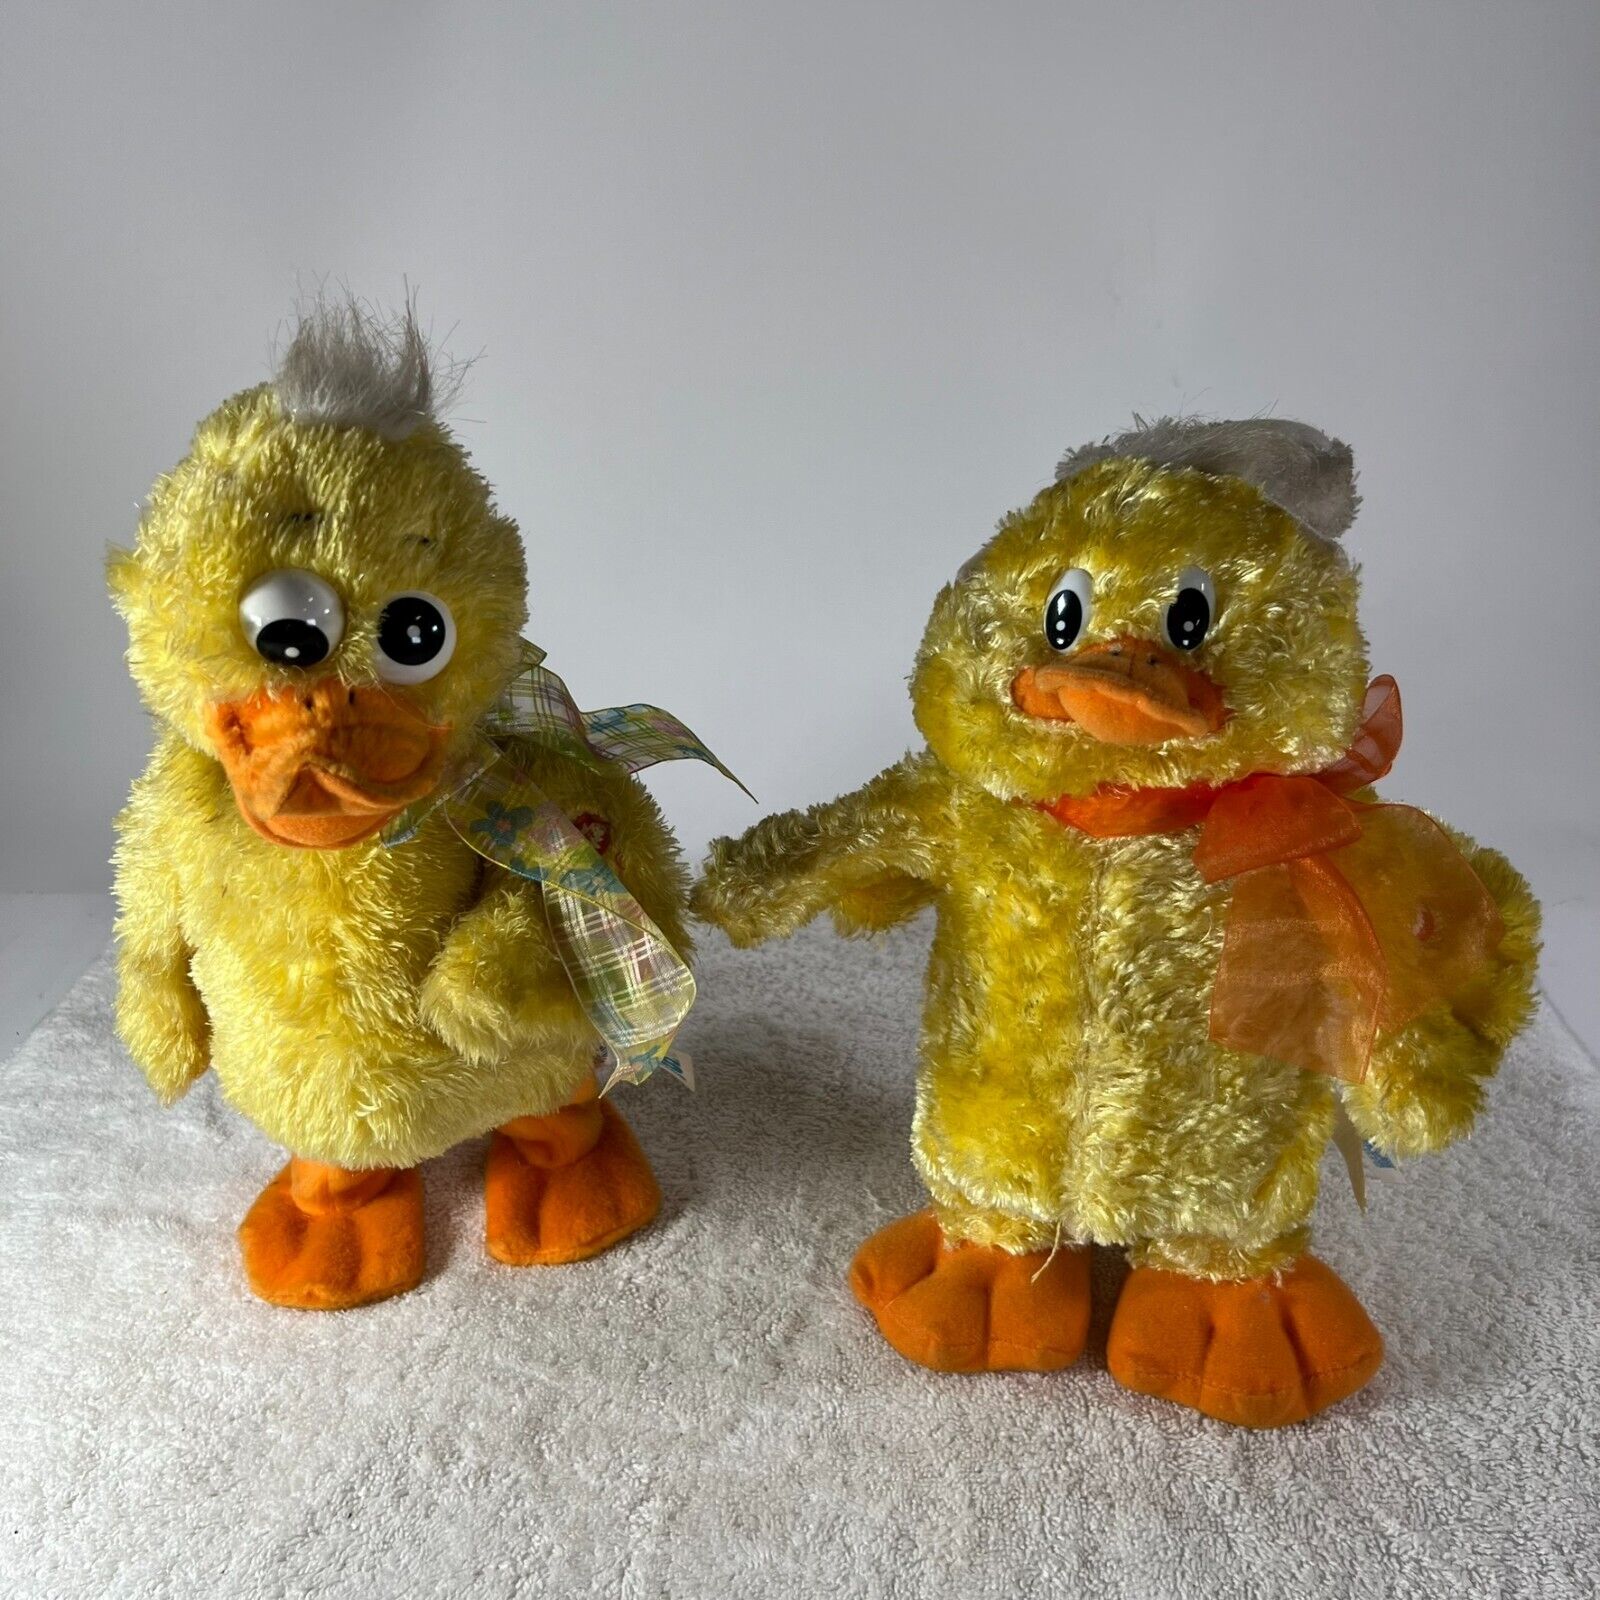 Kids Of American Corp. Vintage Electronic Singing Ducks Yellow - Set of 2 Dolls